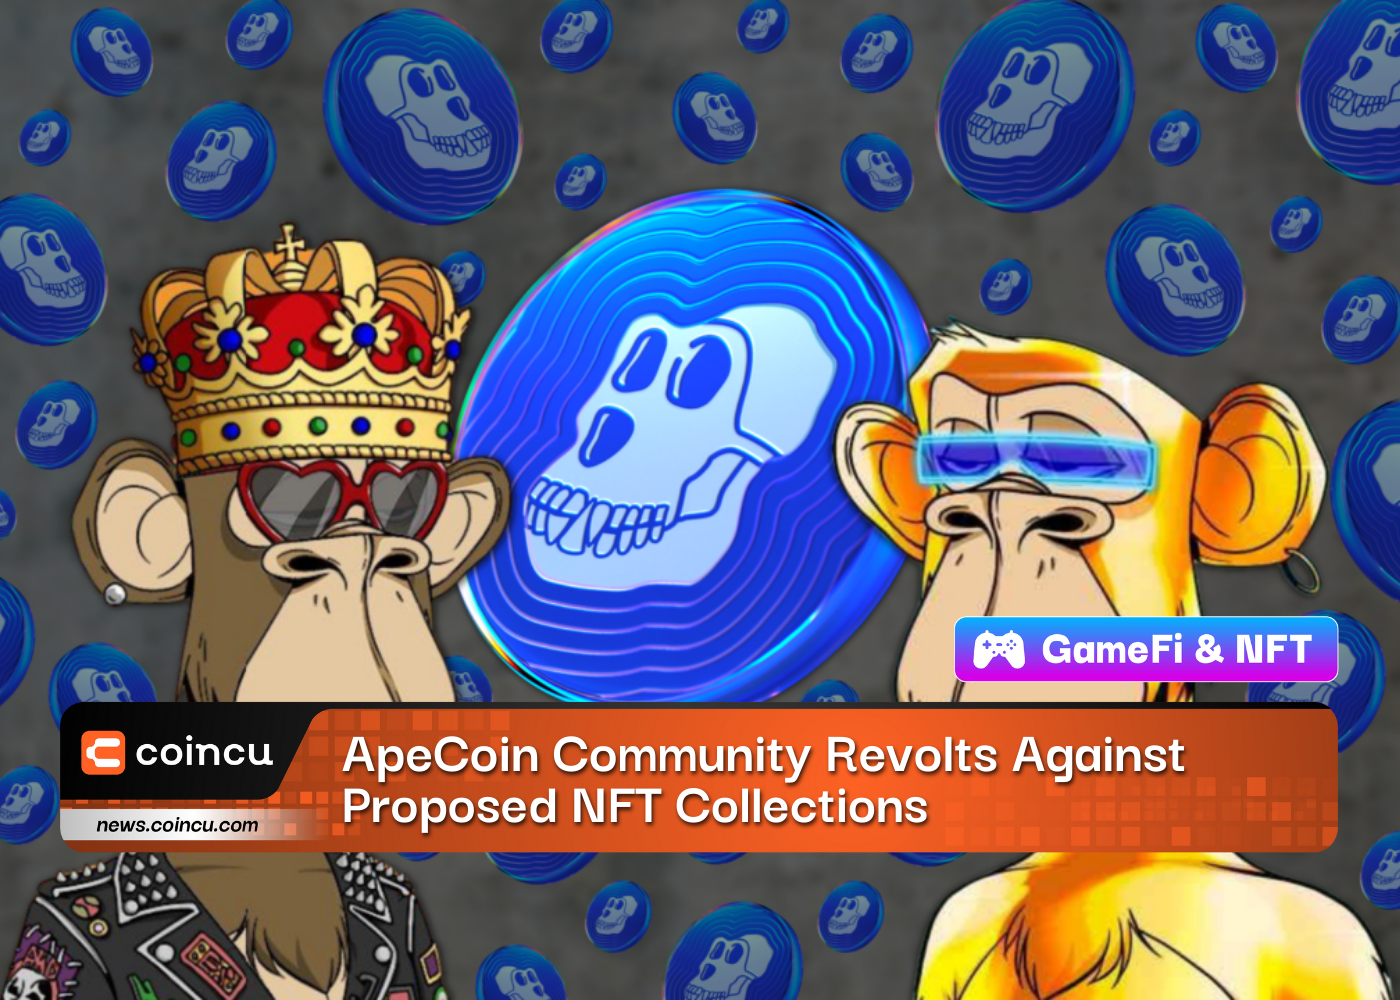 Die ApeCoin-Community revoltiert dagegen